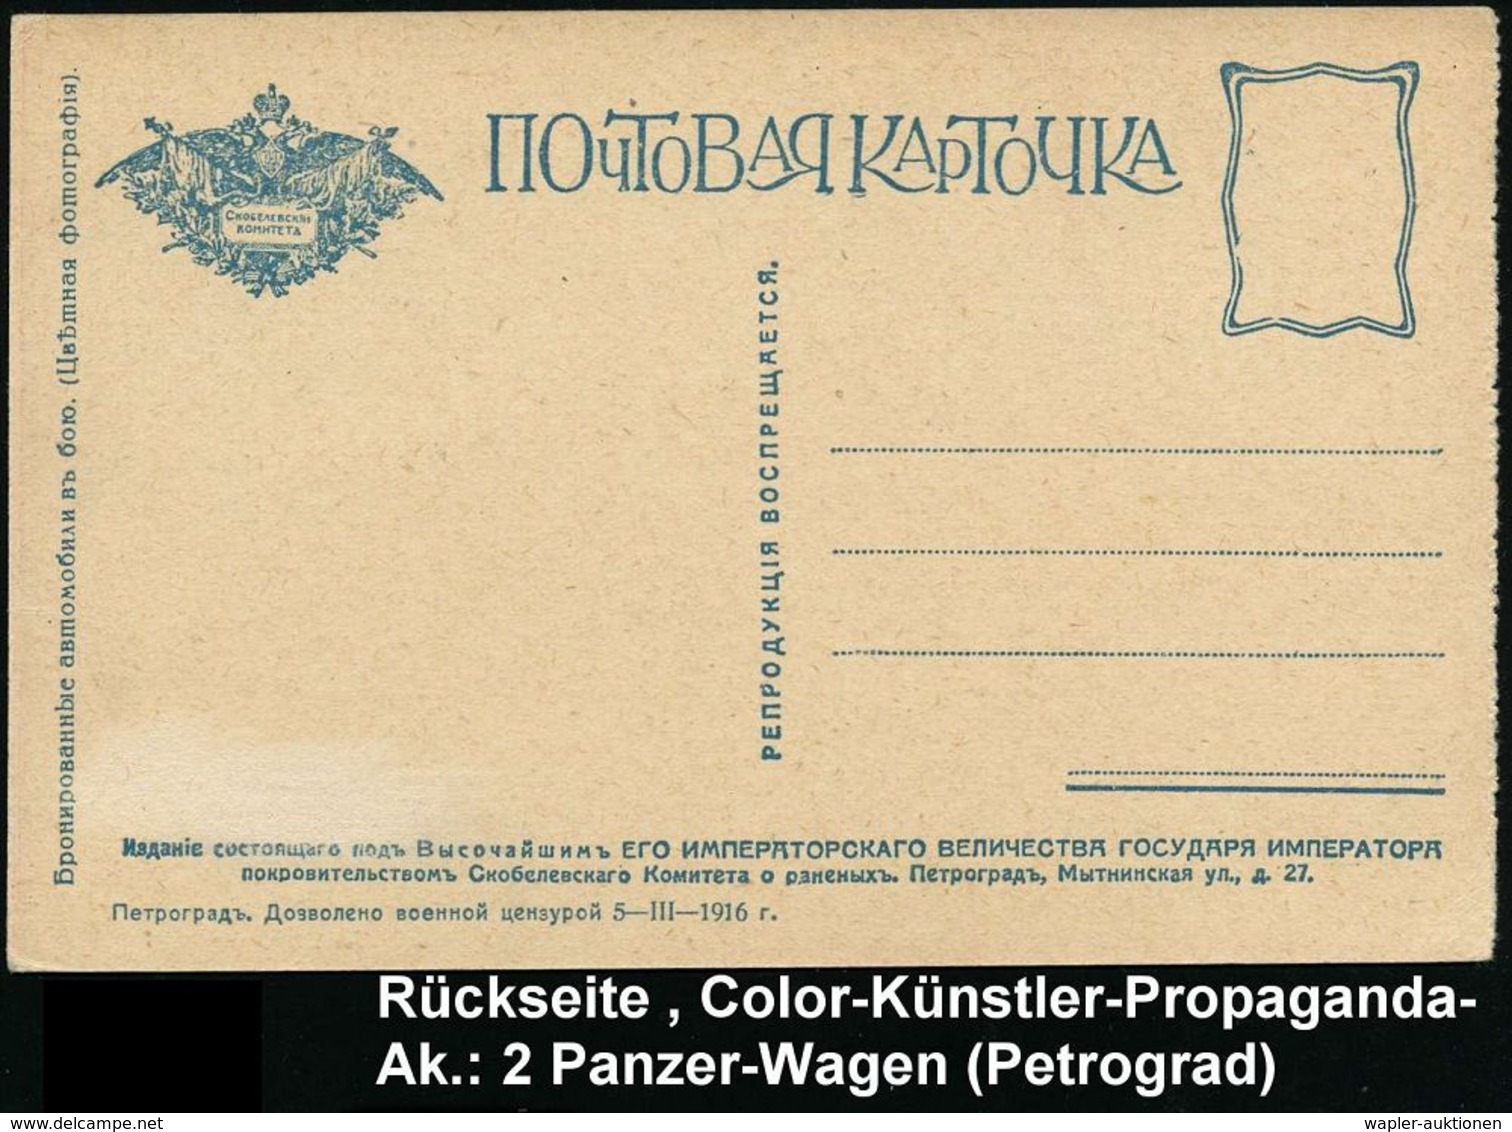 KRAFTFAHR-TRUPPEN / MILITÄR-KFZ. (ohne PANZER) : RUSSLAND 1916 (März) Color-Spenden-Künstler-Ak. (Skobelewski-Komitee):  - Cars